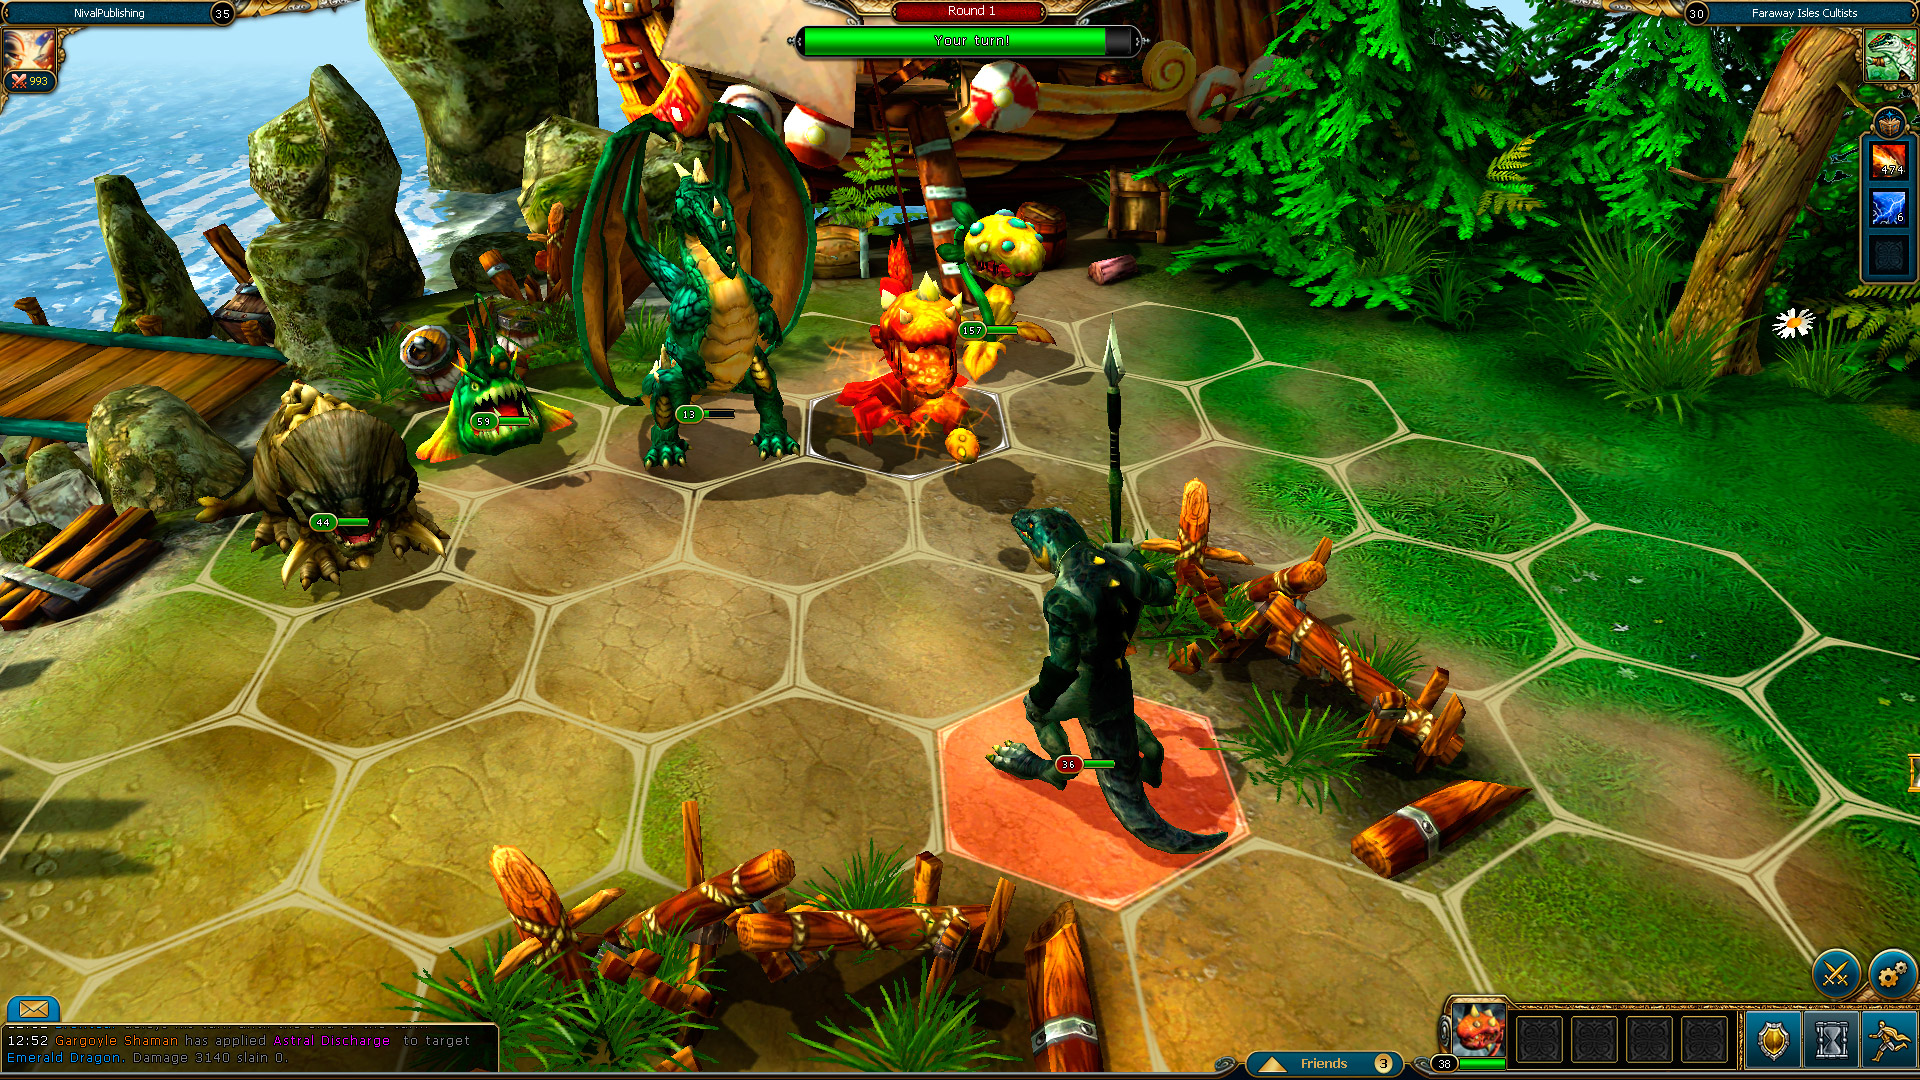 King's Bounty: Legions | Beast Master Pack screenshot